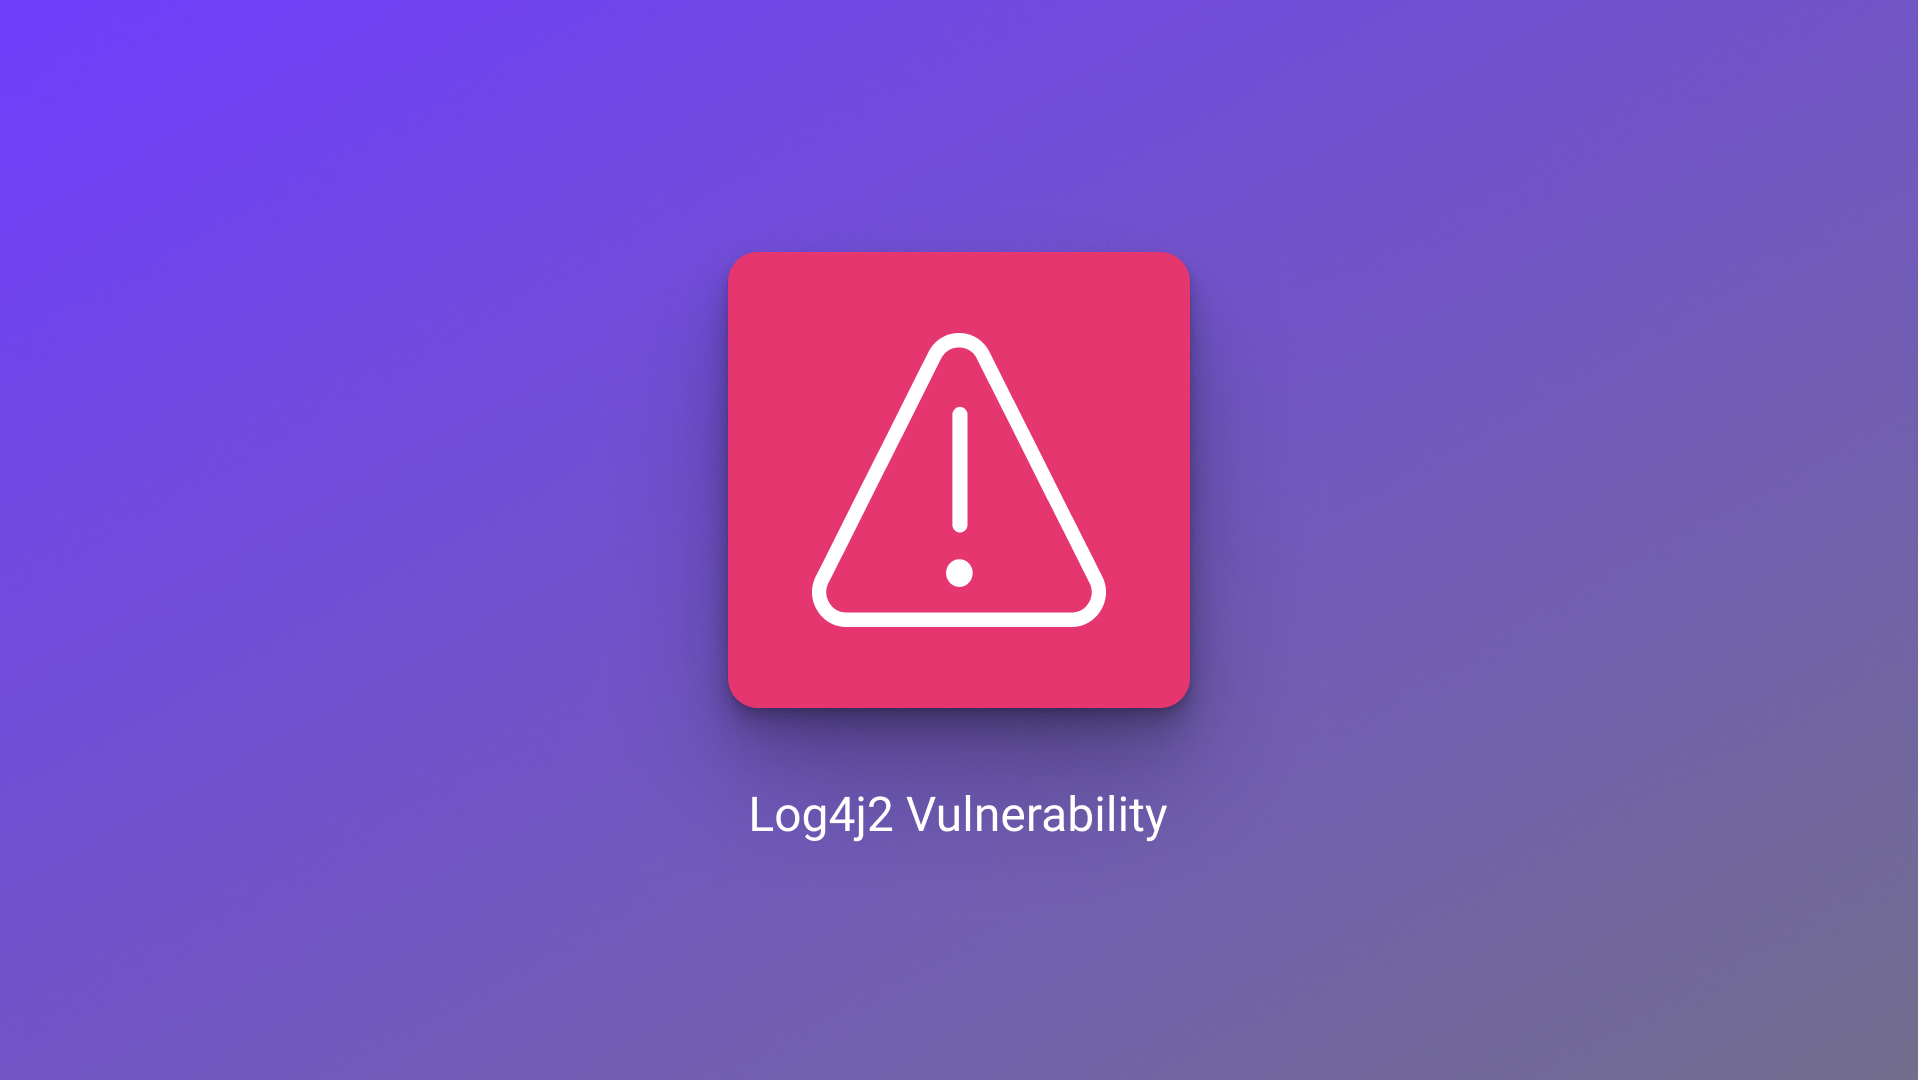 Log4j2 Vulnerability (CVE-2021-44228)